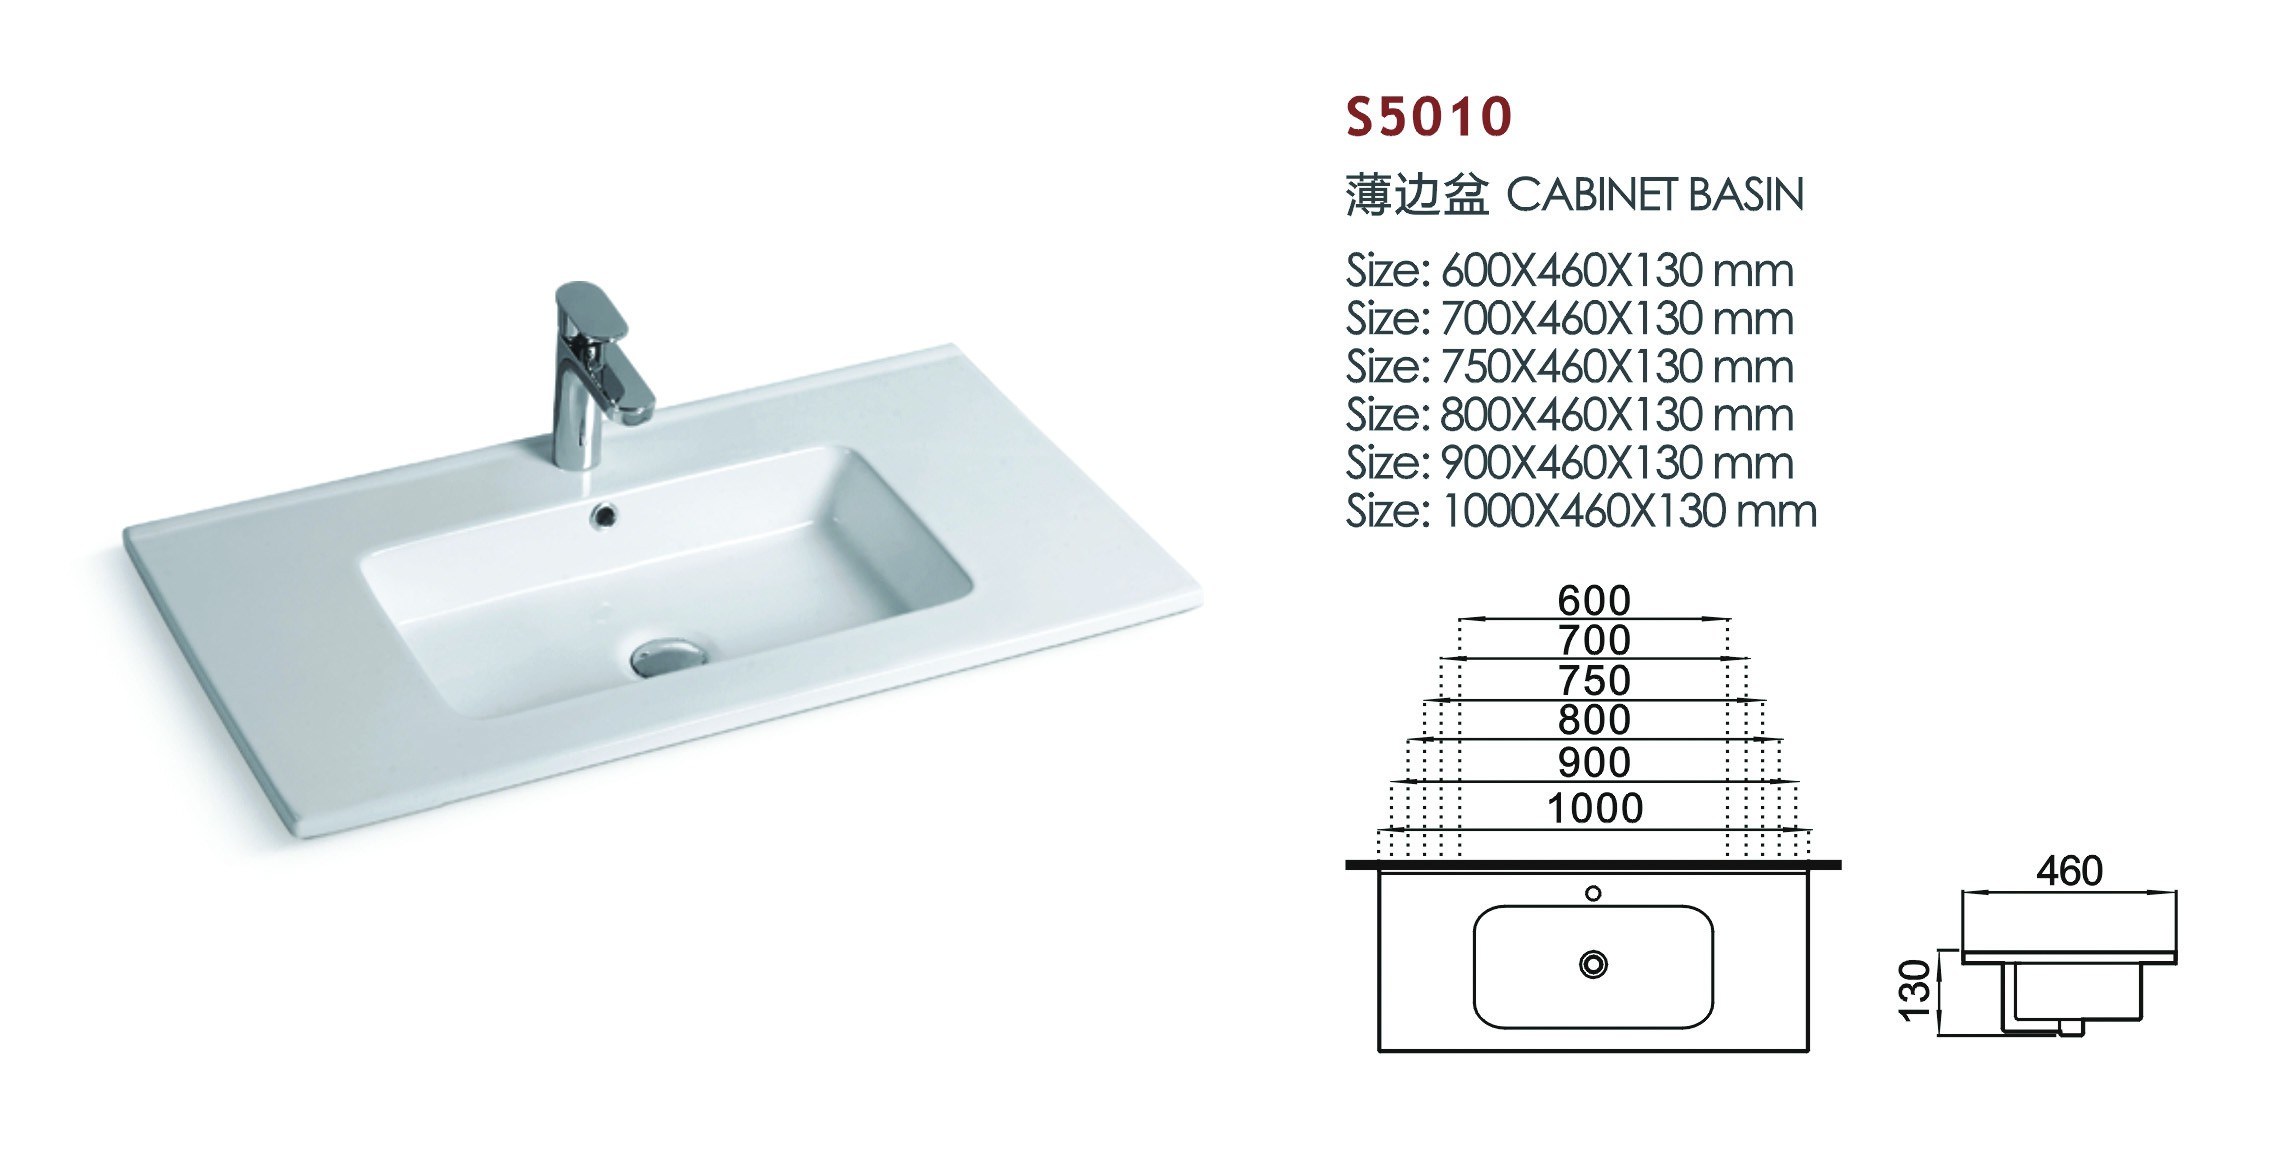 Artistic White Ceramic Sanitary Ware Kitchen Sink (S5010)